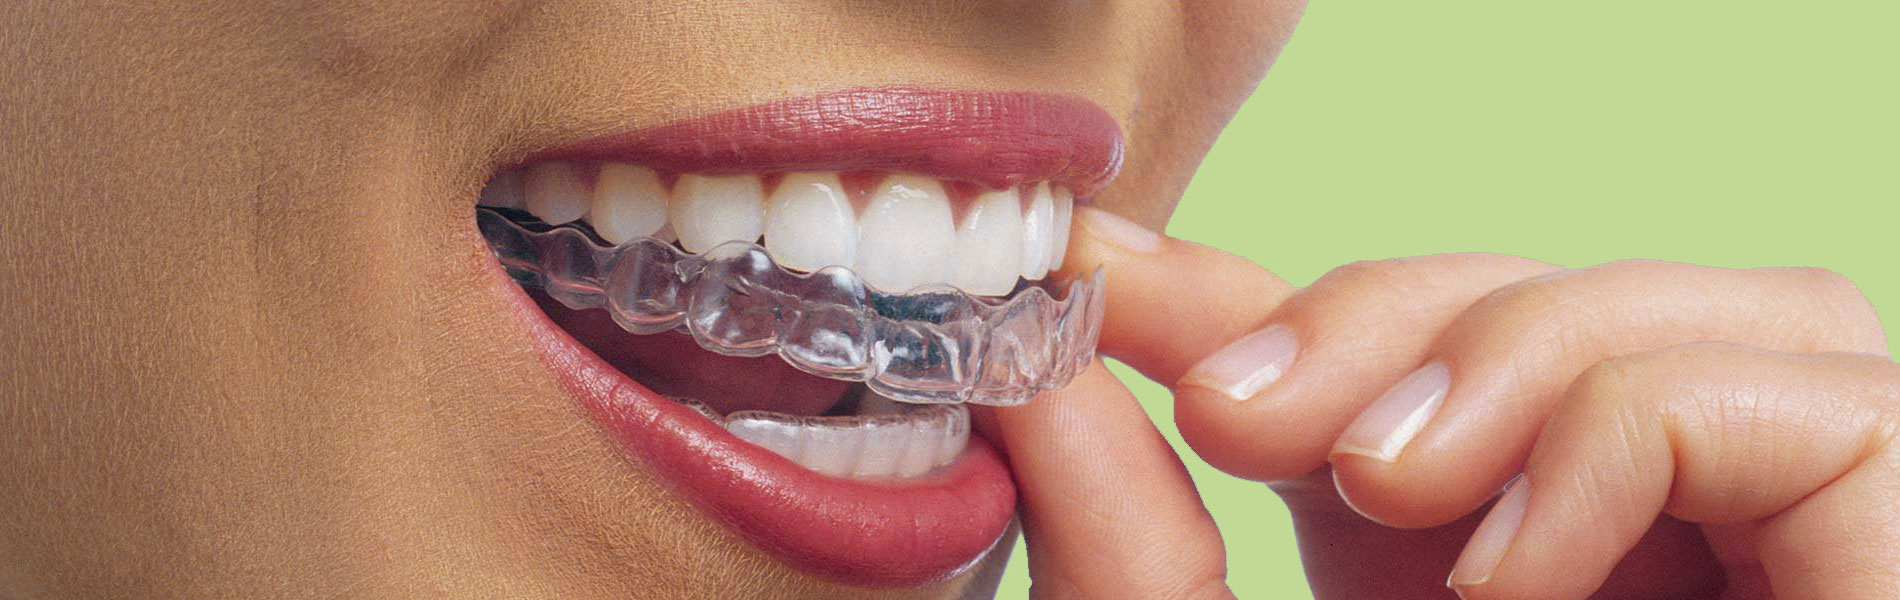 Invisalign - ortodontia